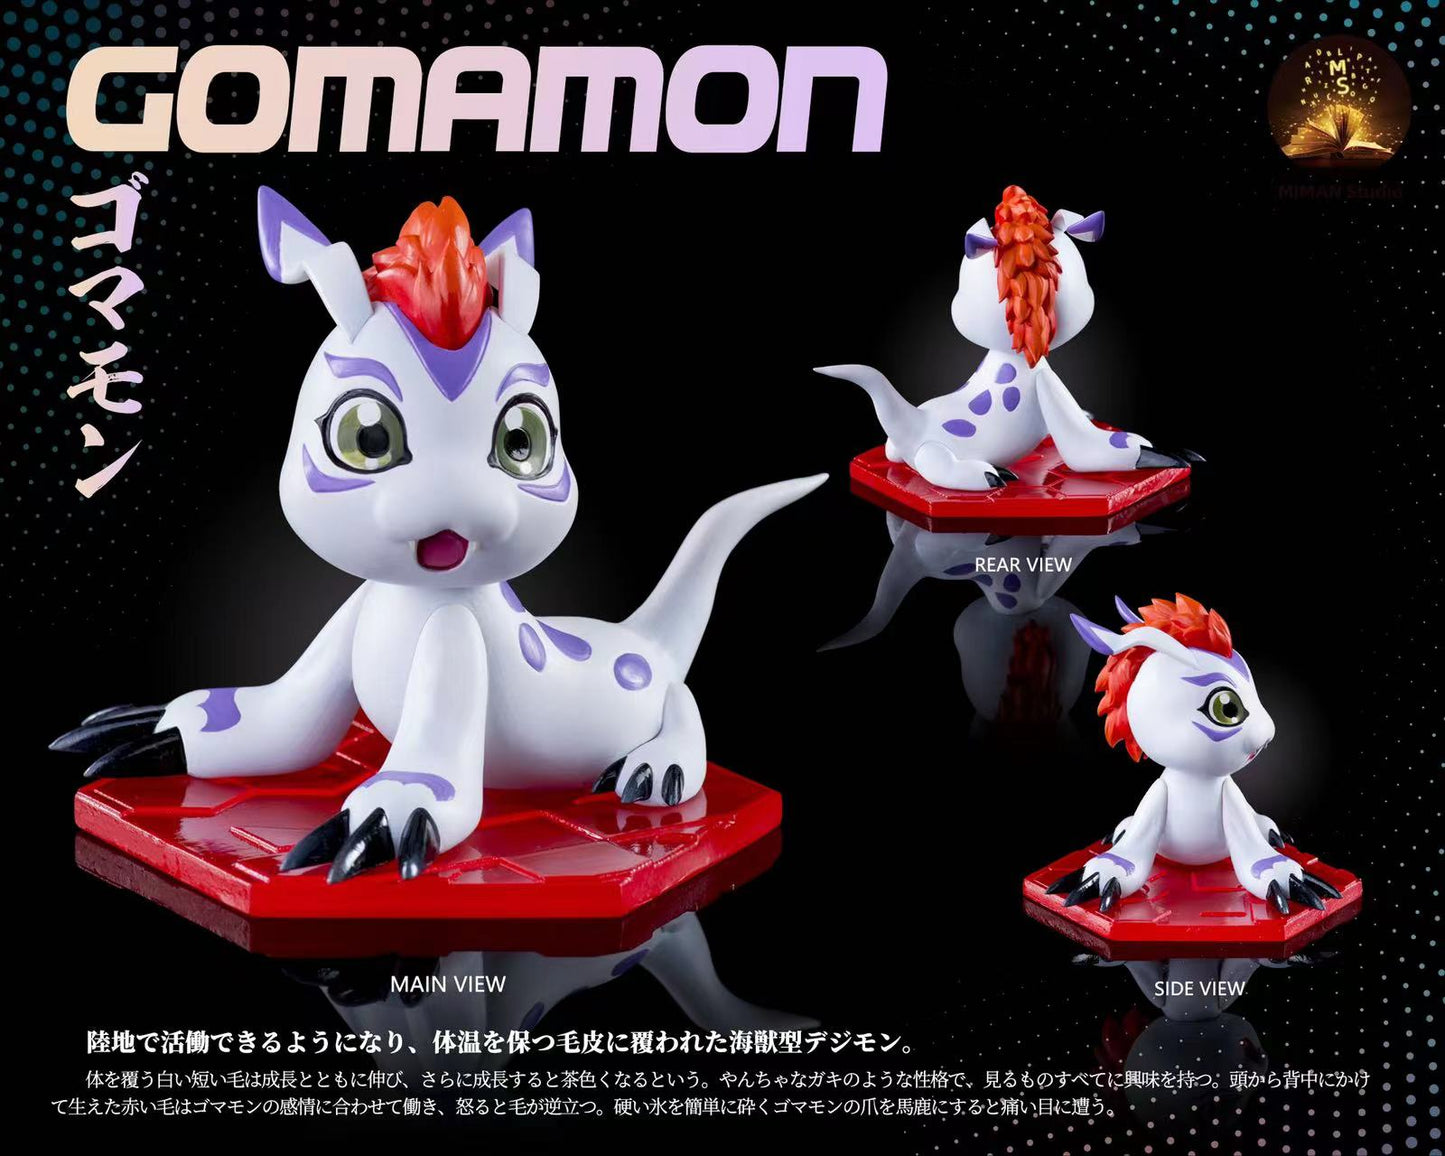 〖Sold Out〗Digimon Gomamon Vikemon - Miman Studio